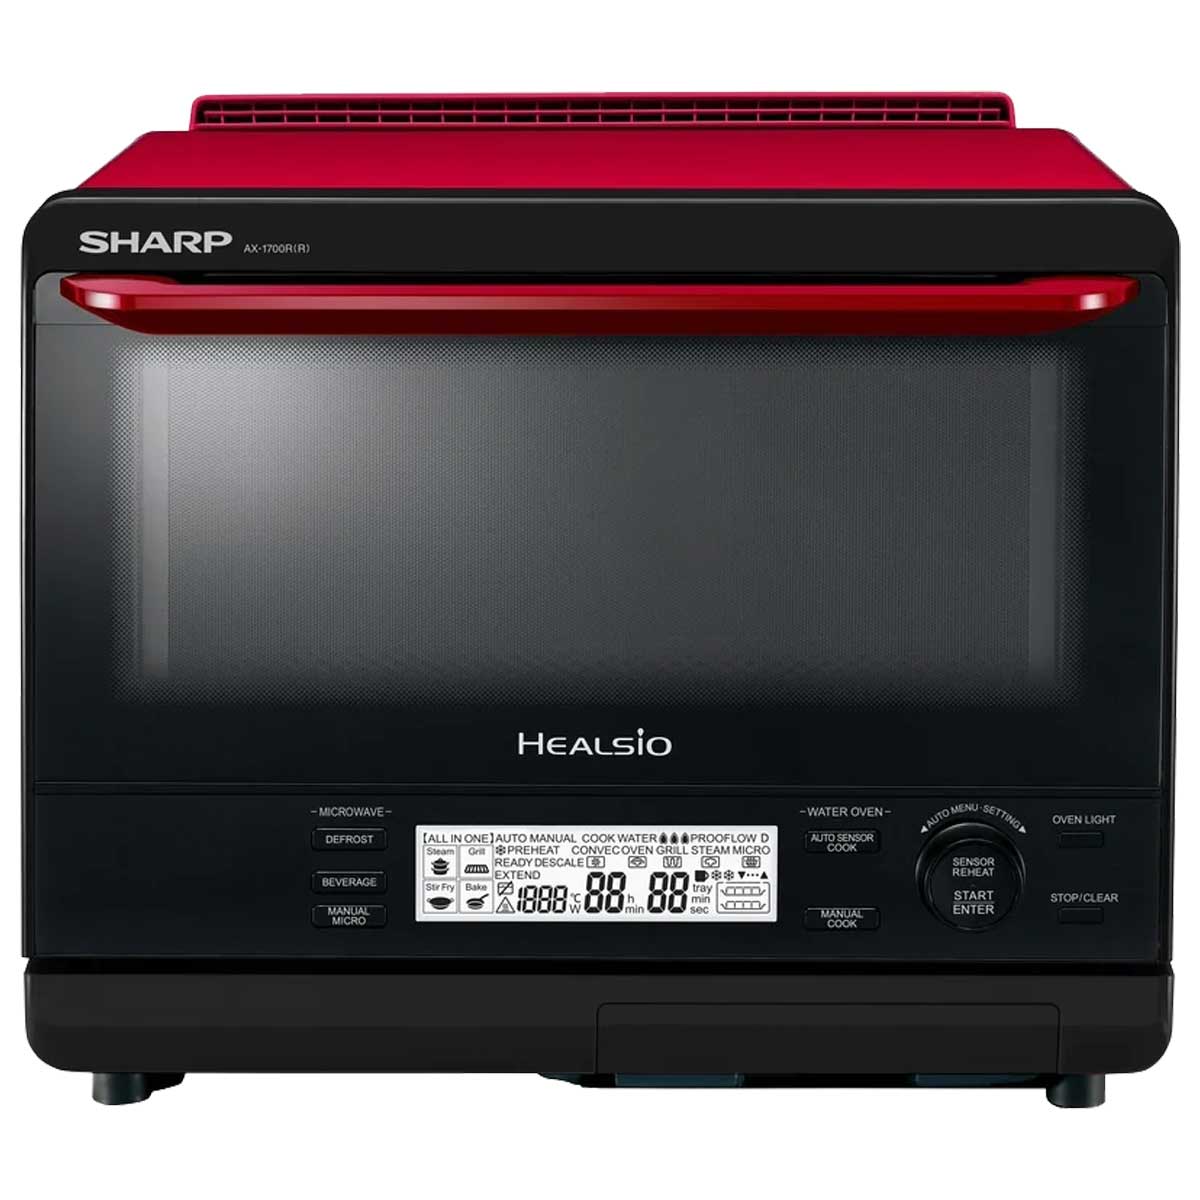 Sharp 聲寶 AX-1700R(R) 31公升 Healsio 水波爐 (紅色) - ShineCreation 創暉百貨